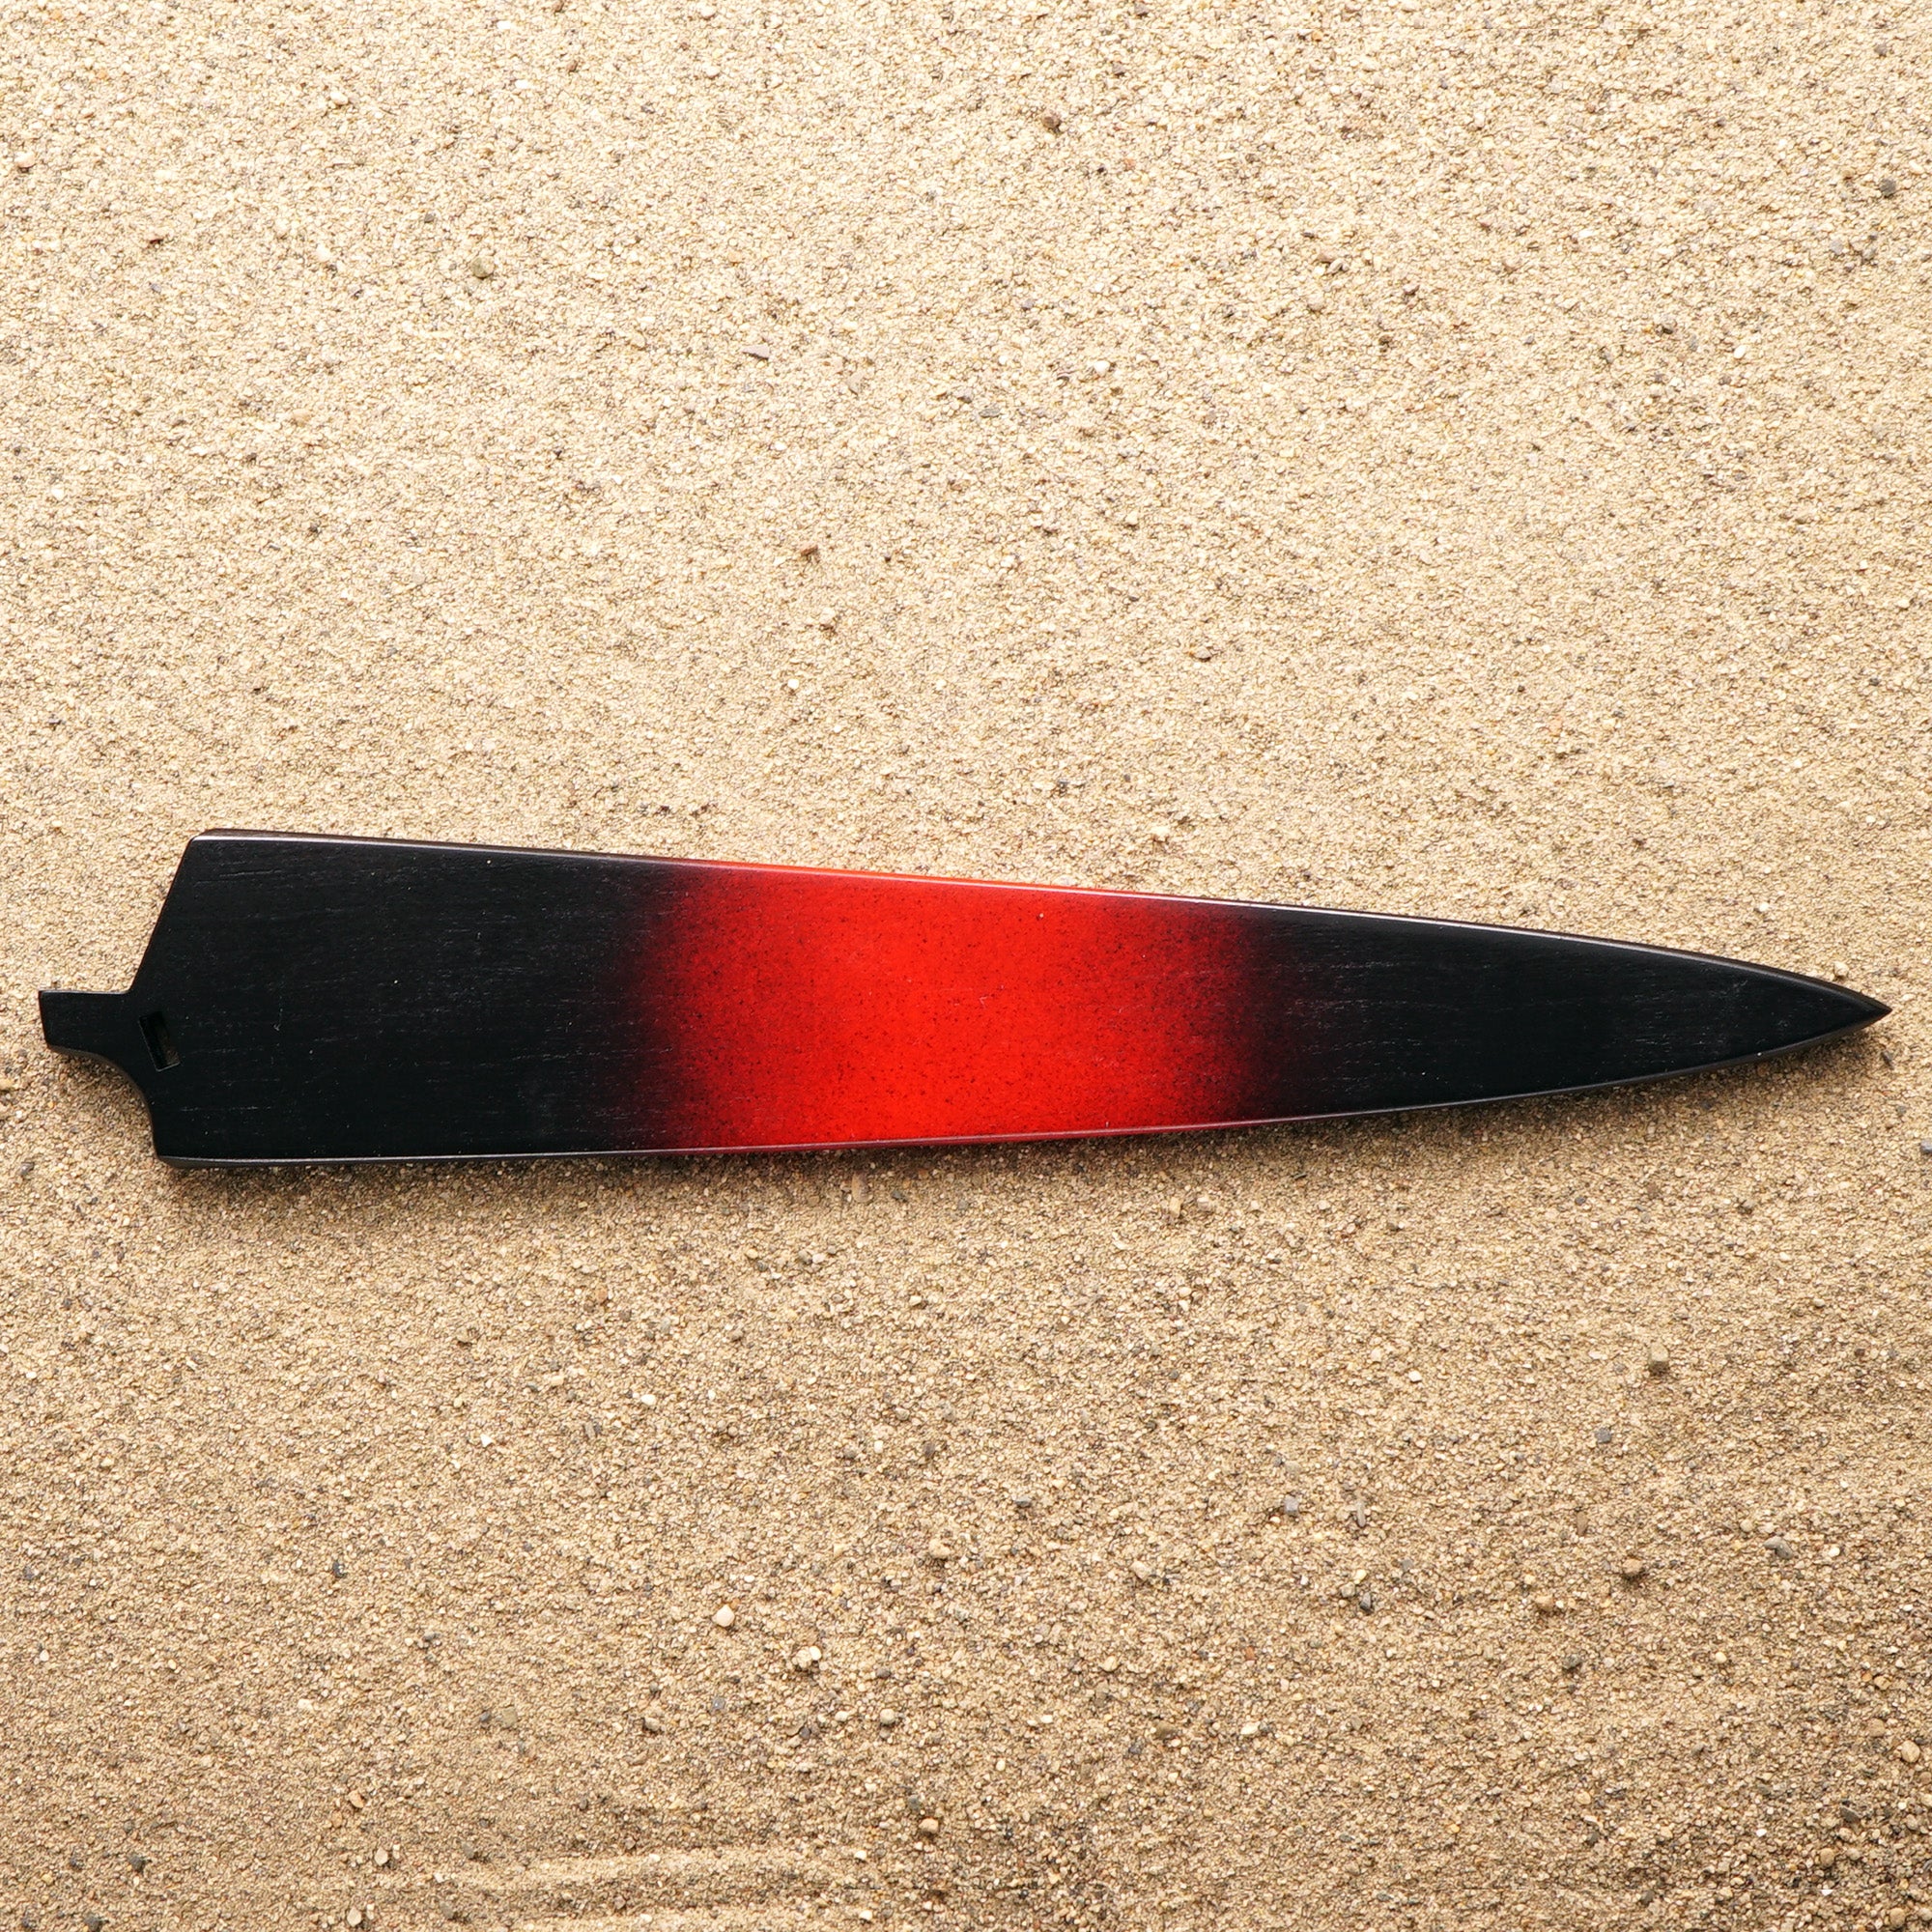 Black and red wood saya knife sheath for Town Cutler Baja slicer knife..